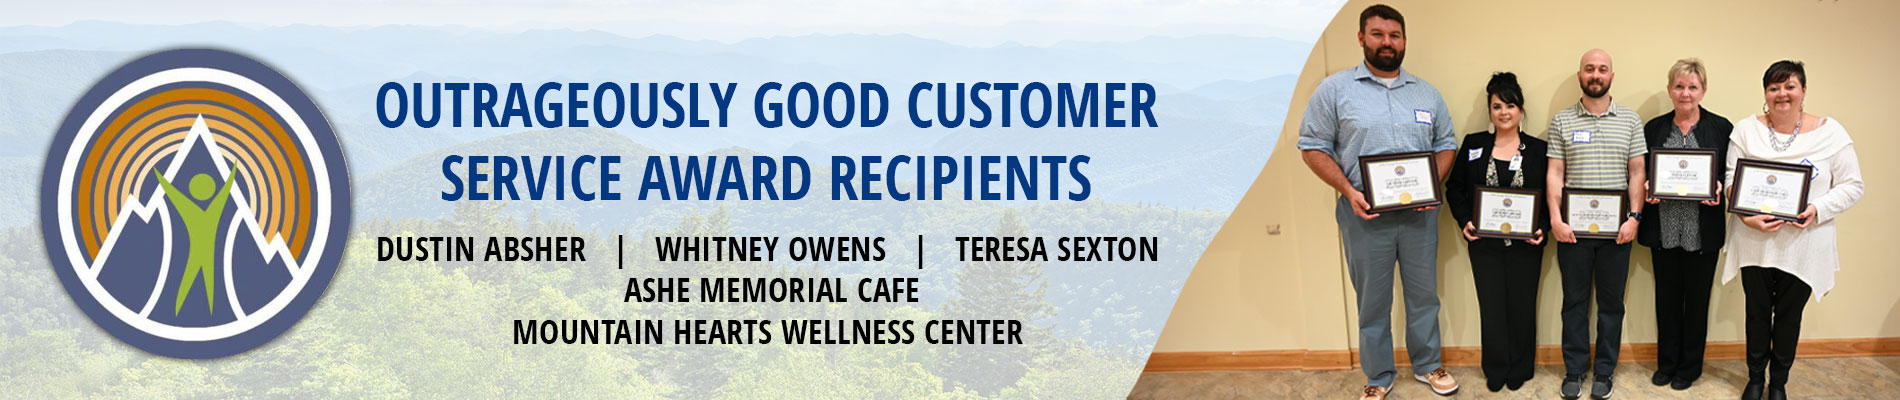 Outrageously Good Customer Service Award recipients 

Dustin Absher, Whitney Owens, Teresa Sexton, Ashe Memorial Cafe, Mountain Hearts Wellness Center